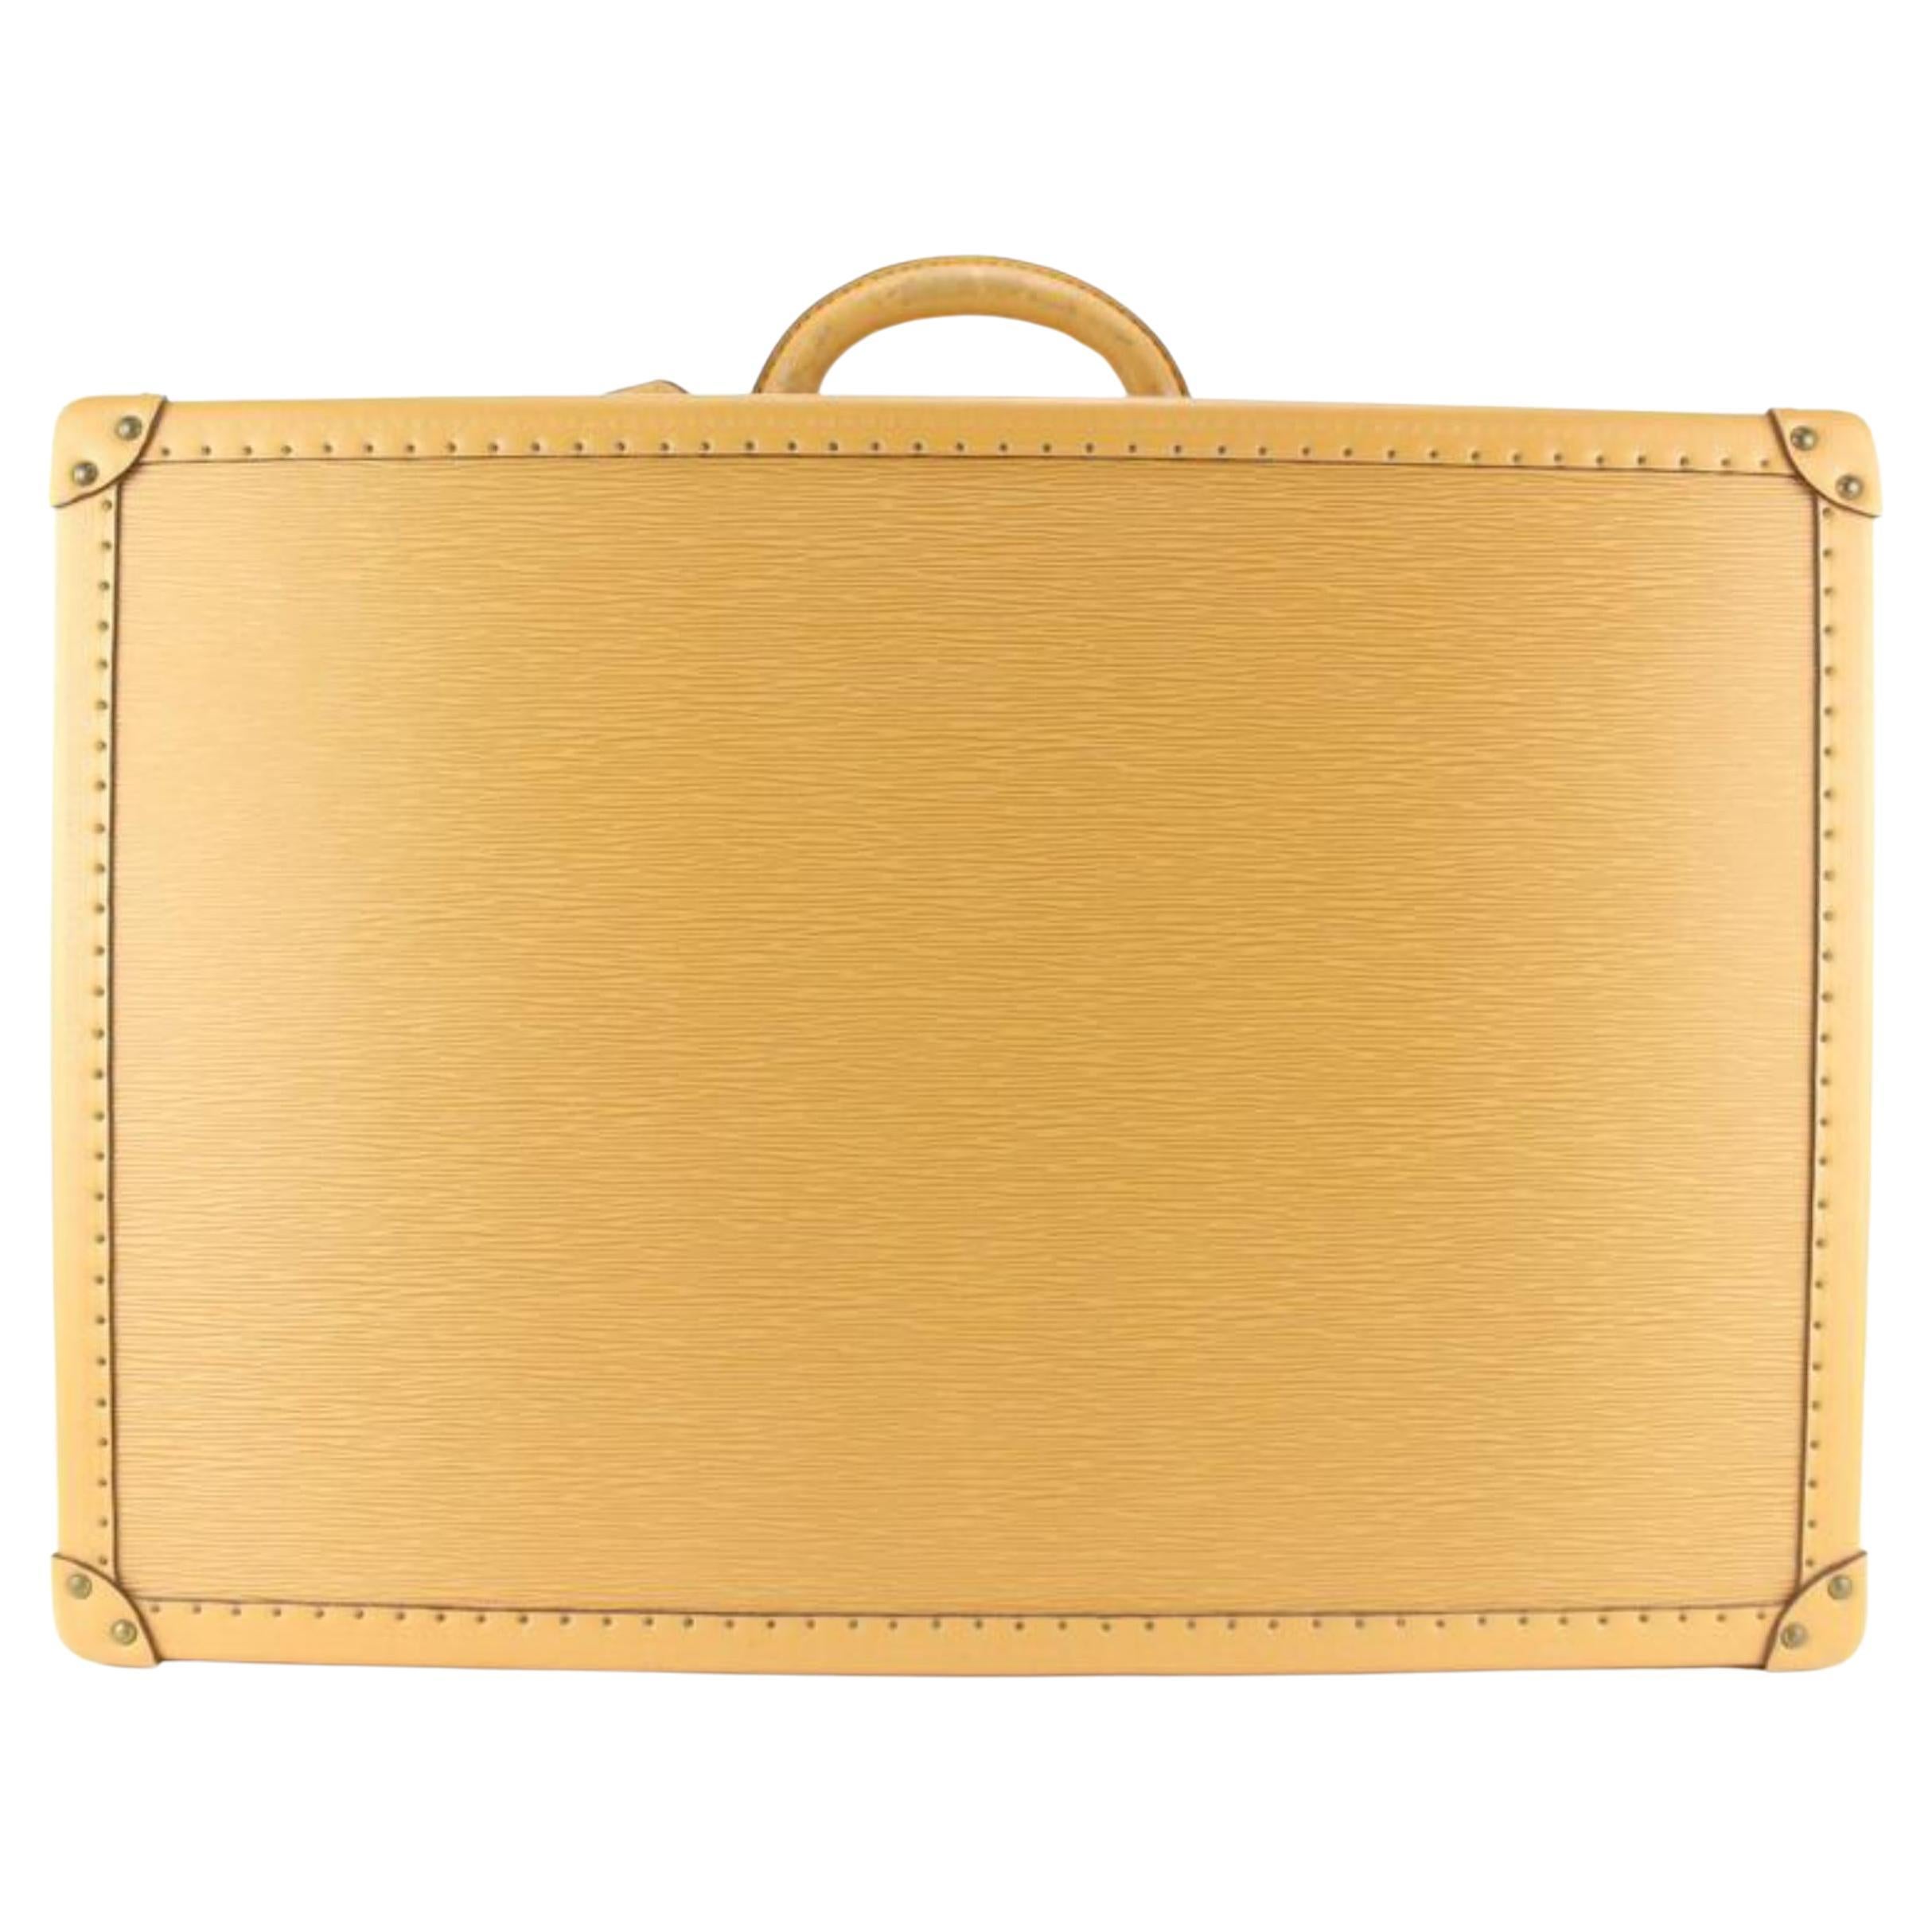 Louis Vuitton Keepall Bag Epi Leather 60 at 1stDibs